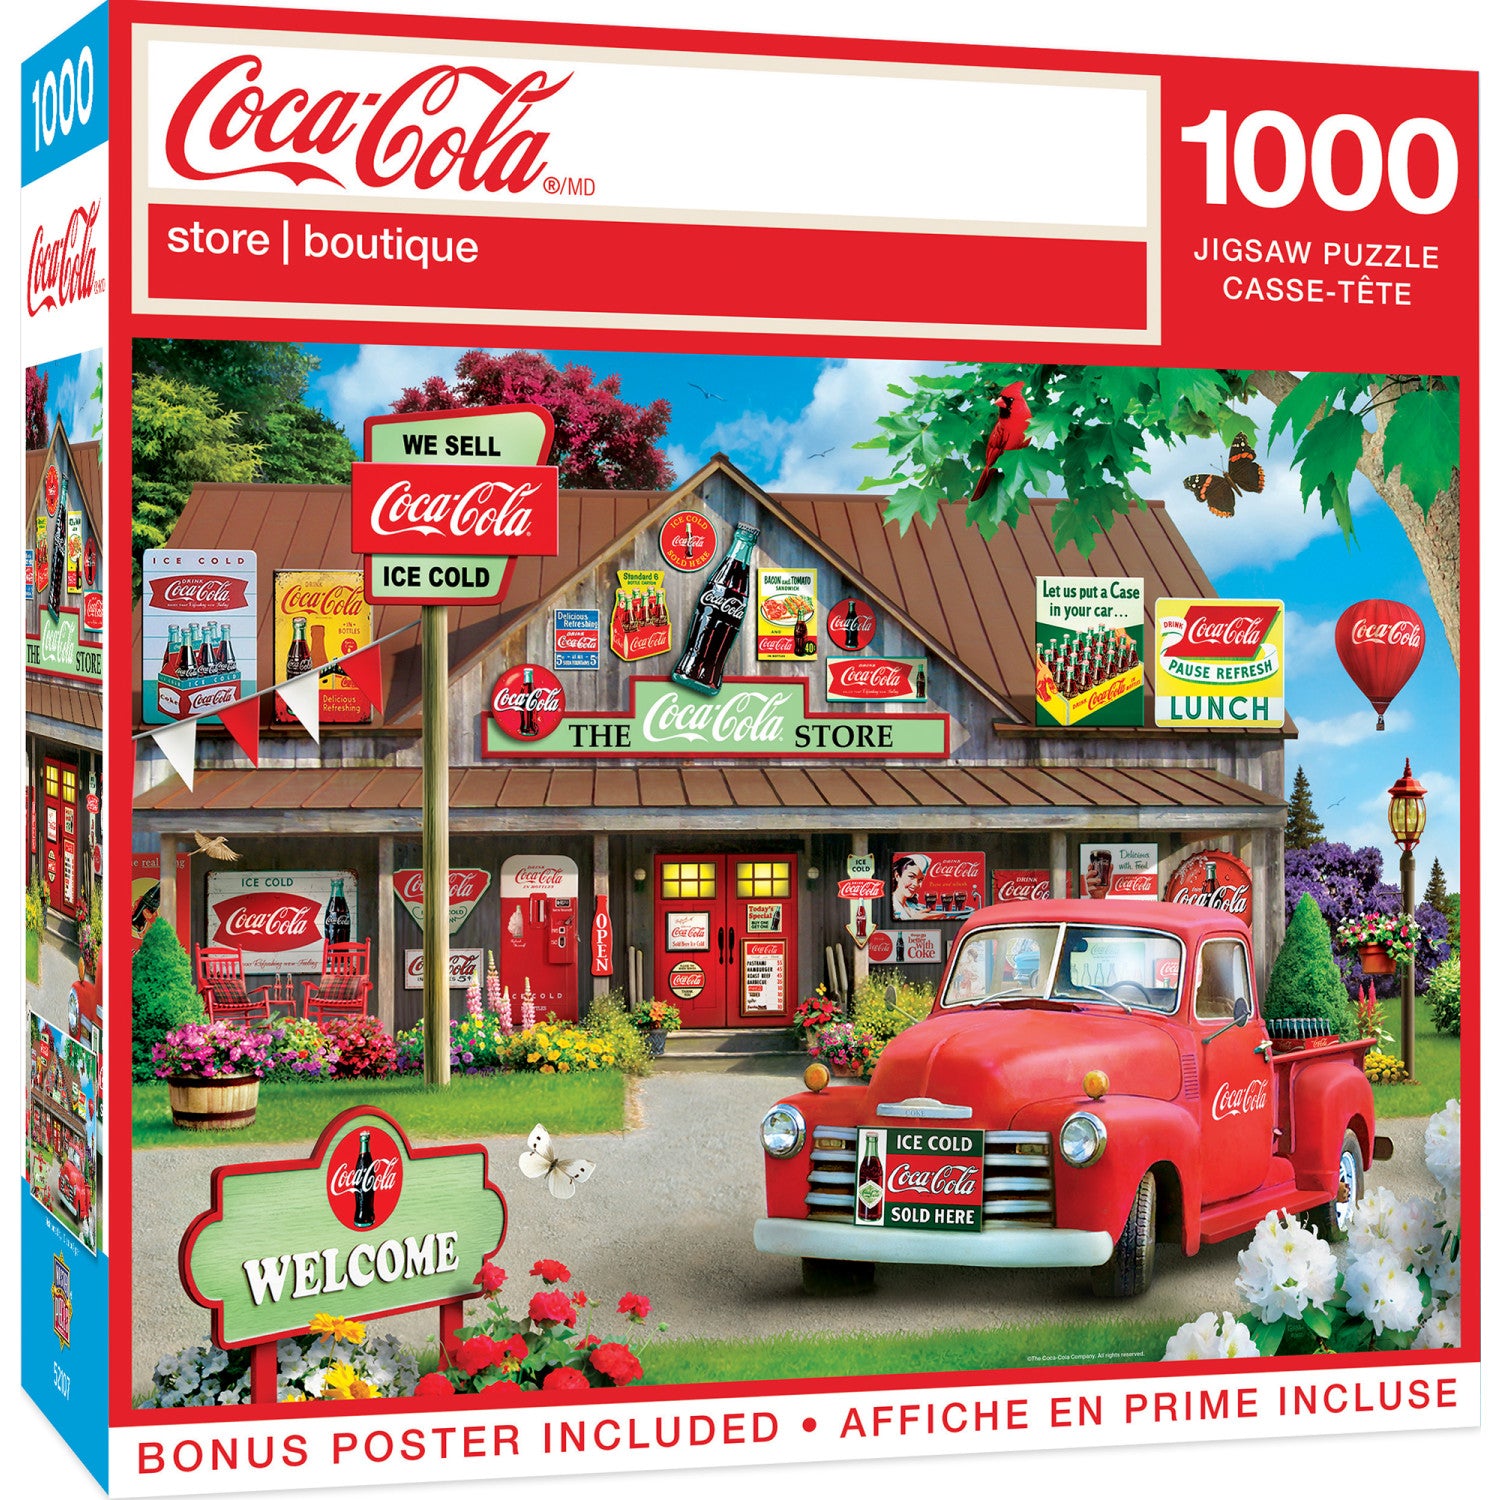 Coca-Cola - The Store 1000 Piece Puzzle